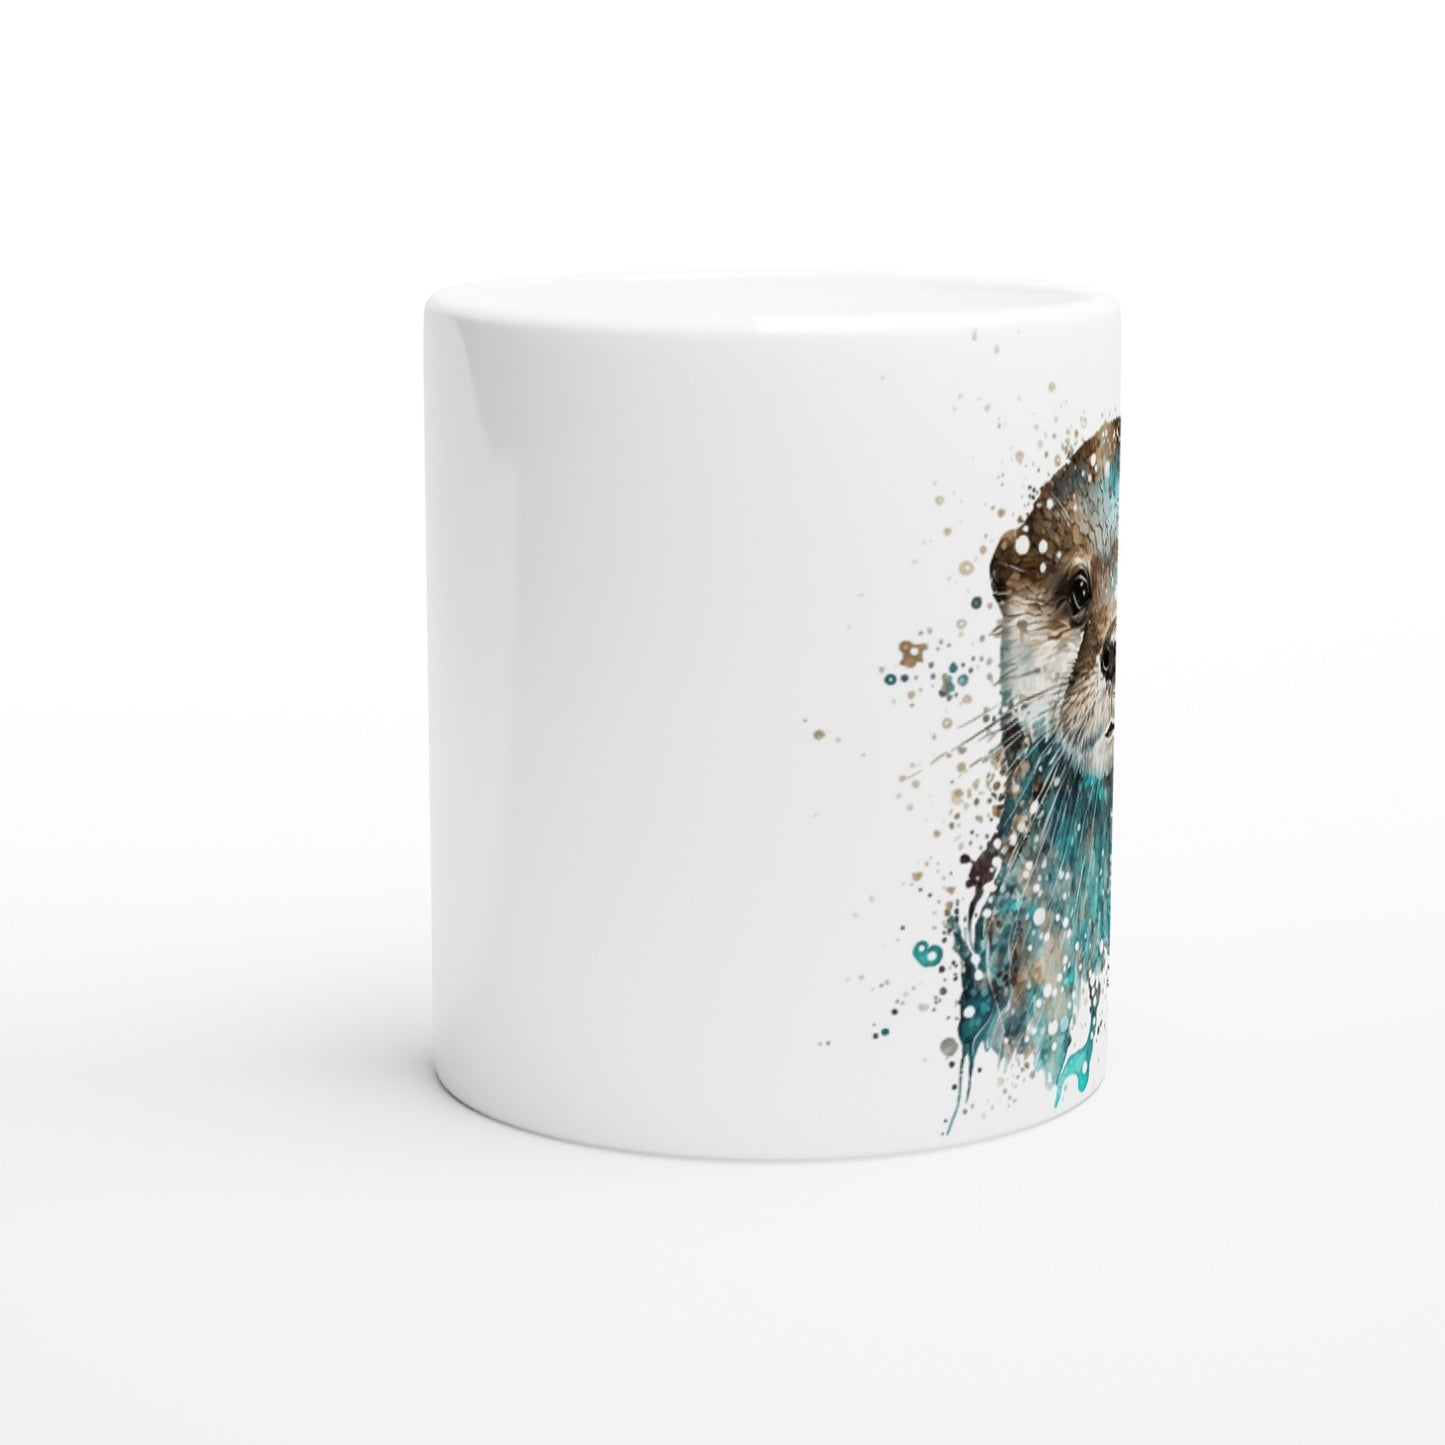 Otter - 11oz Ceramic Mug